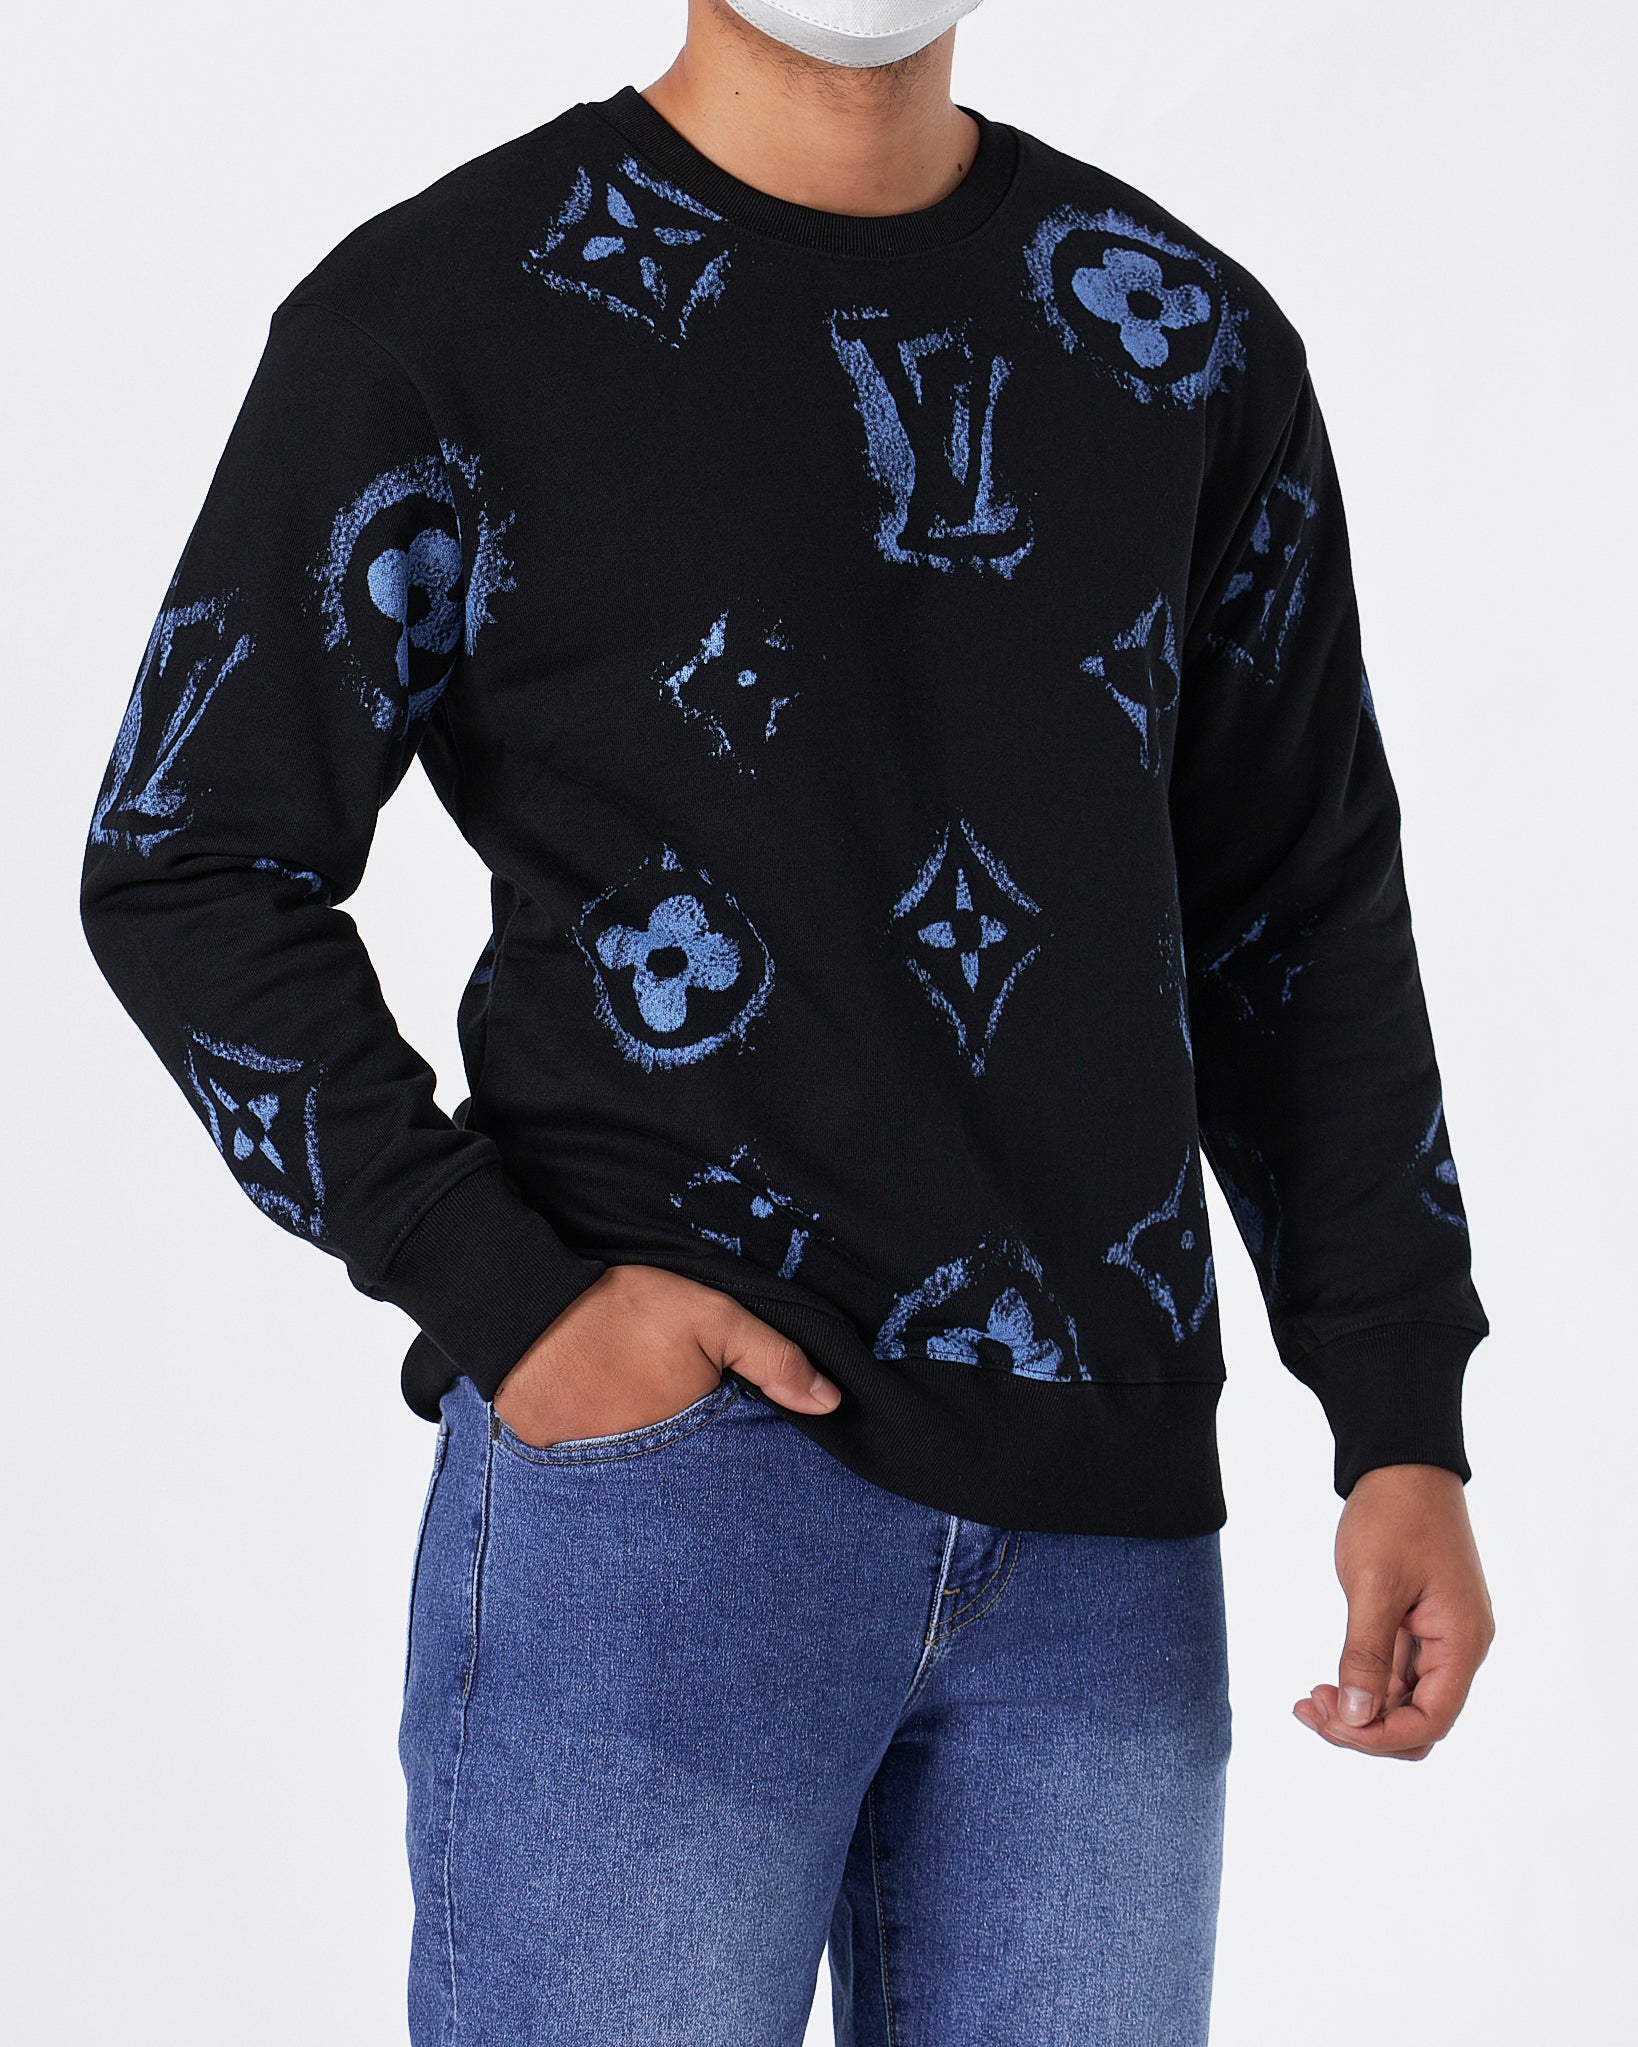 blue lv sweater